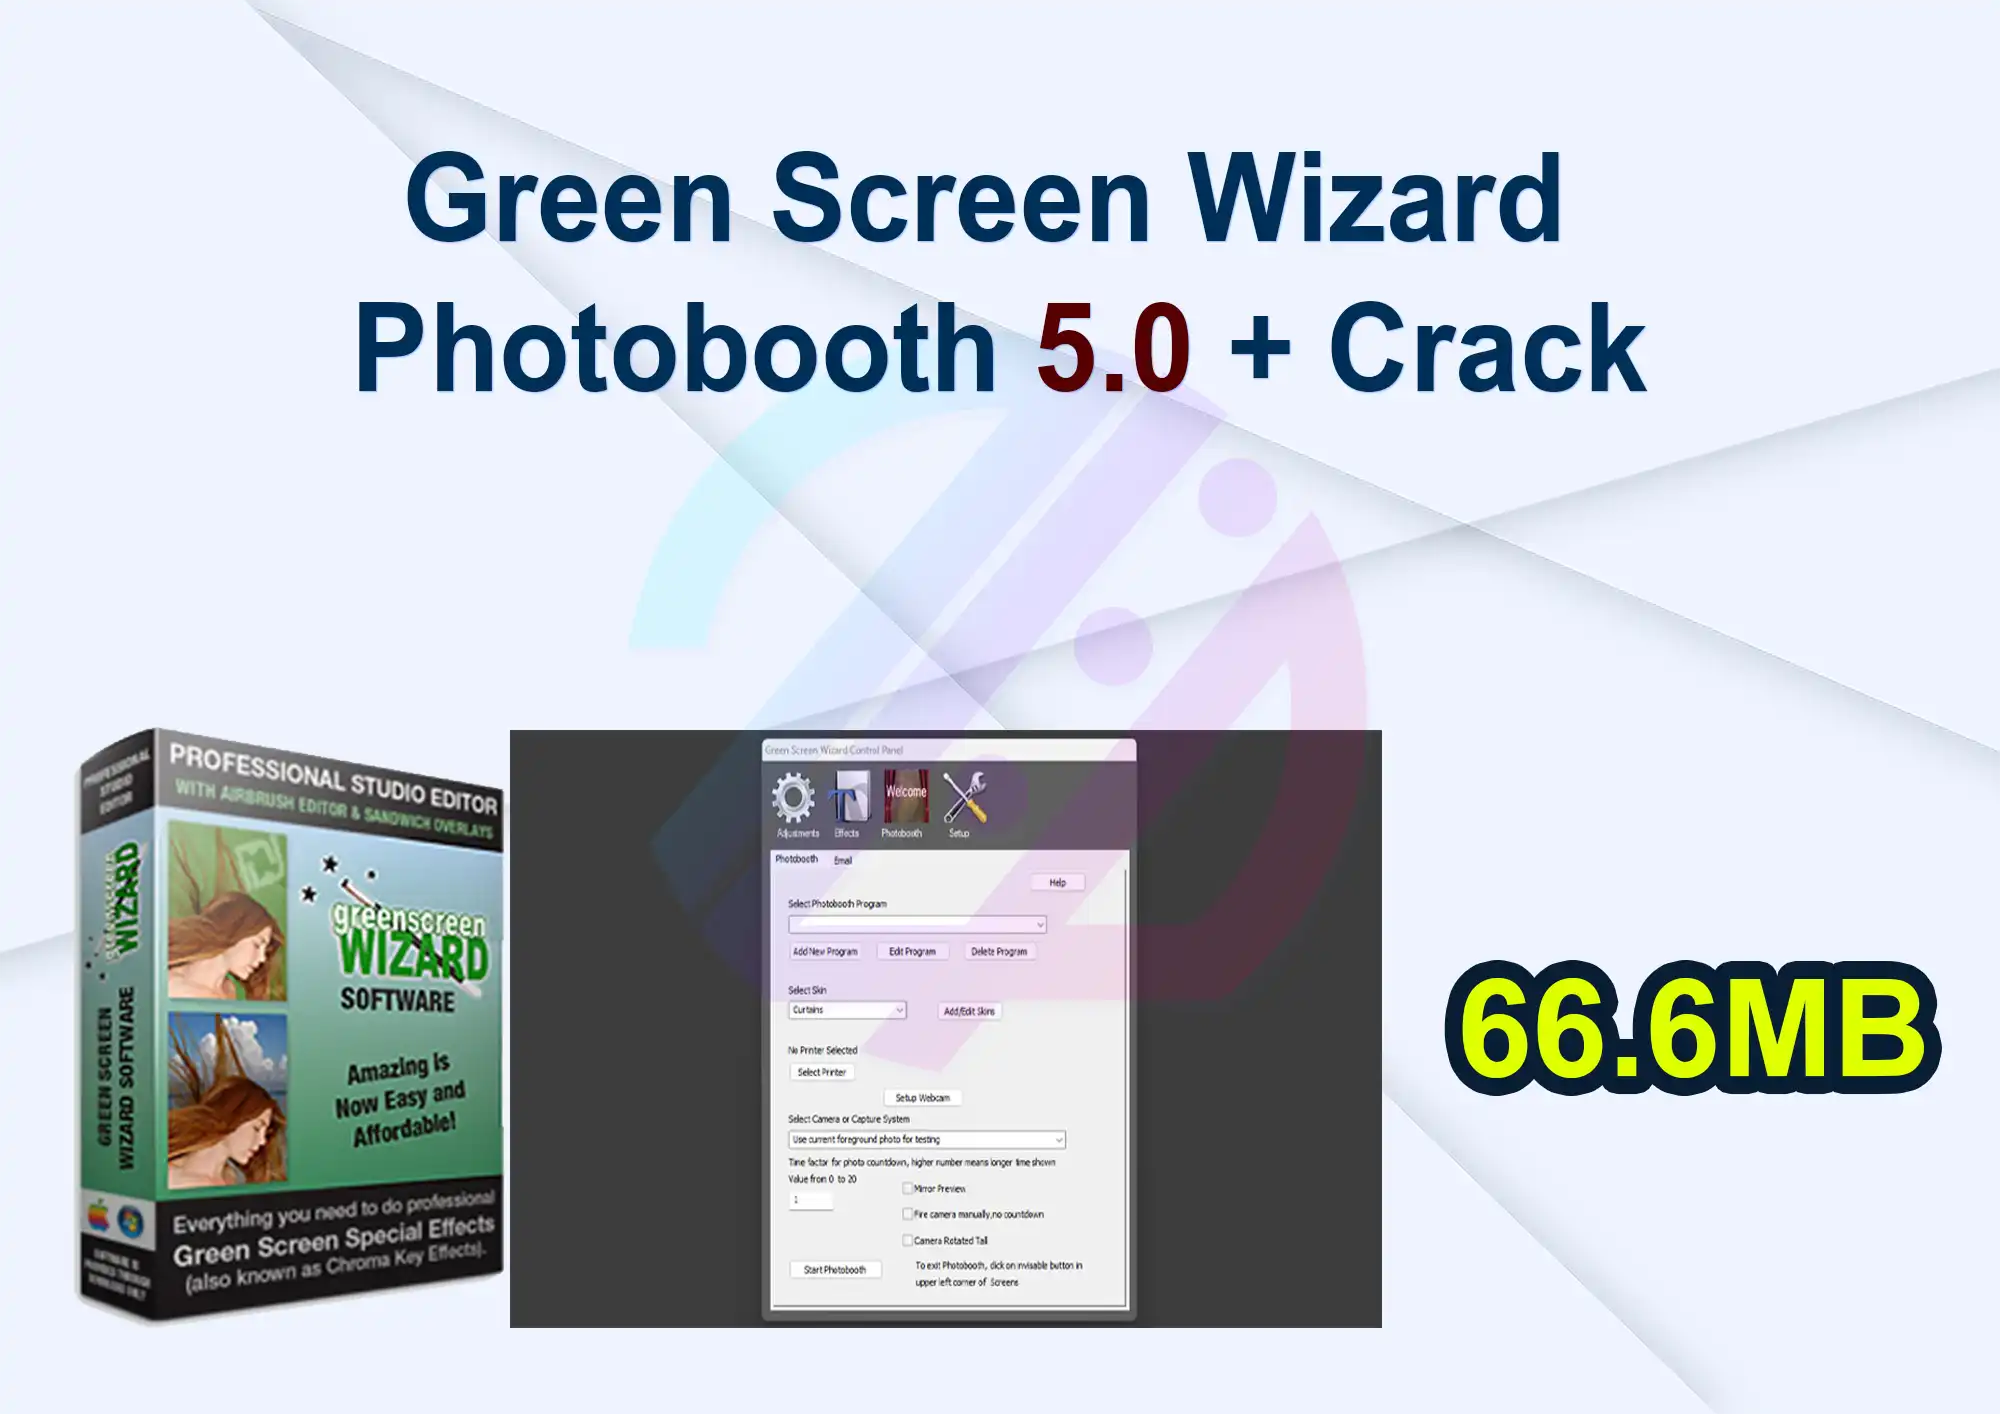 Green Screen Wizard Photobooth 5.0 + Crack